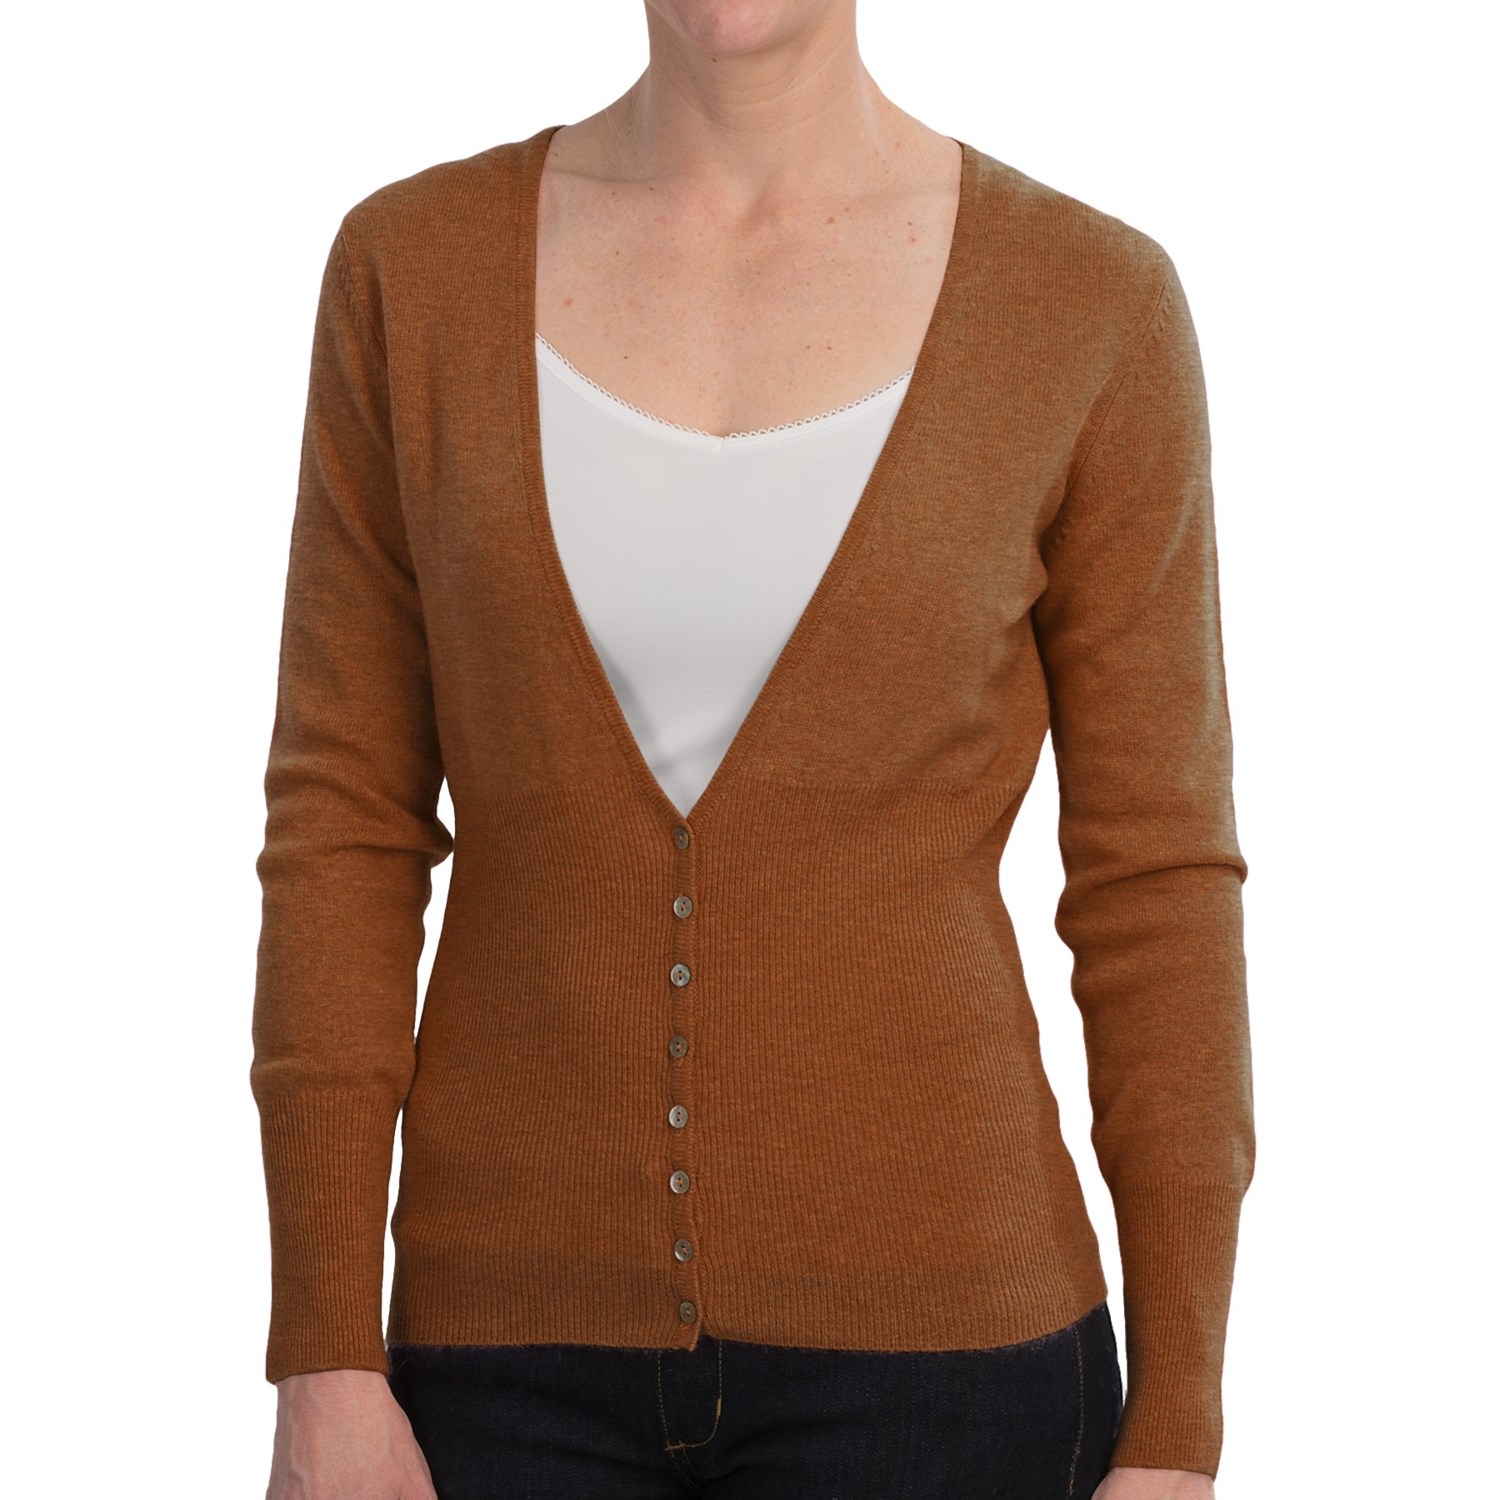 Deep V Neck Cashmere Cardigan Sweater (For Women) 9024U 67